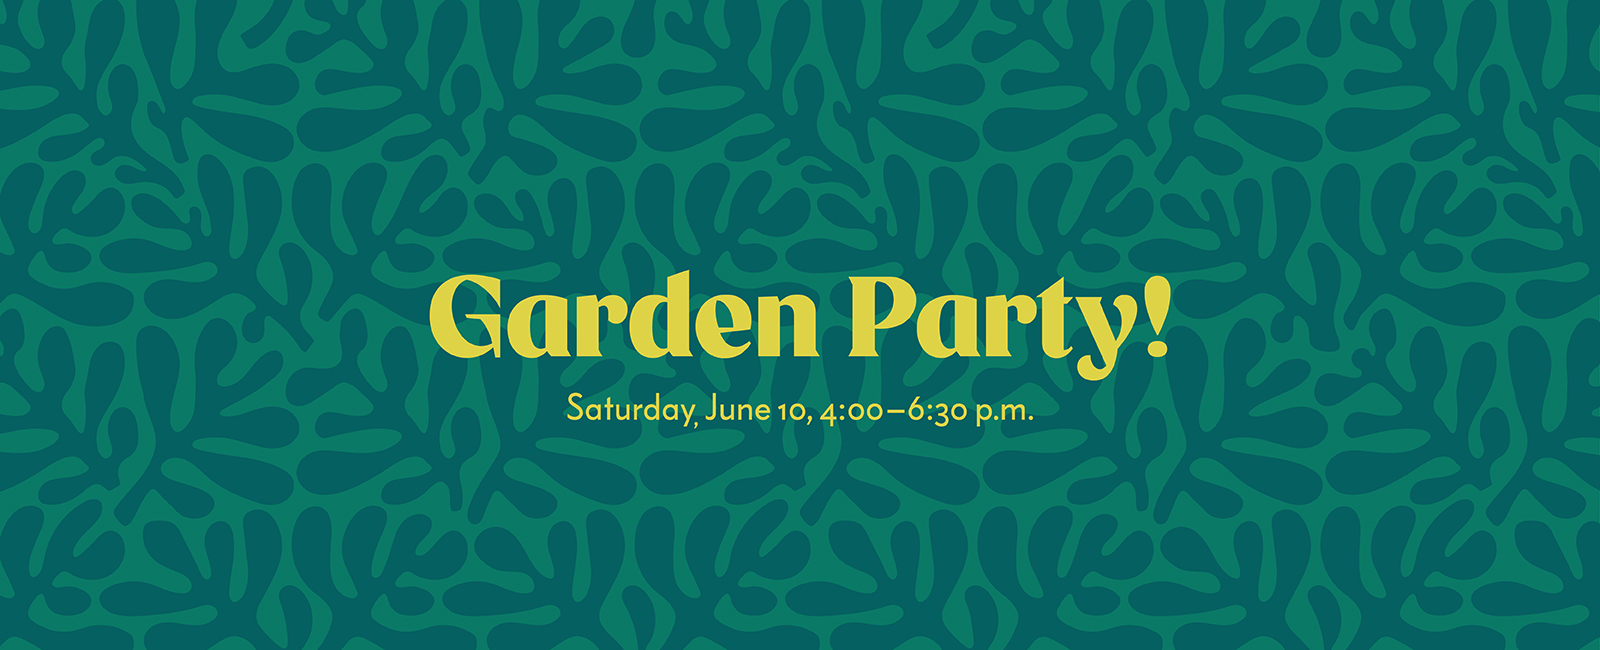 Garden Party banner